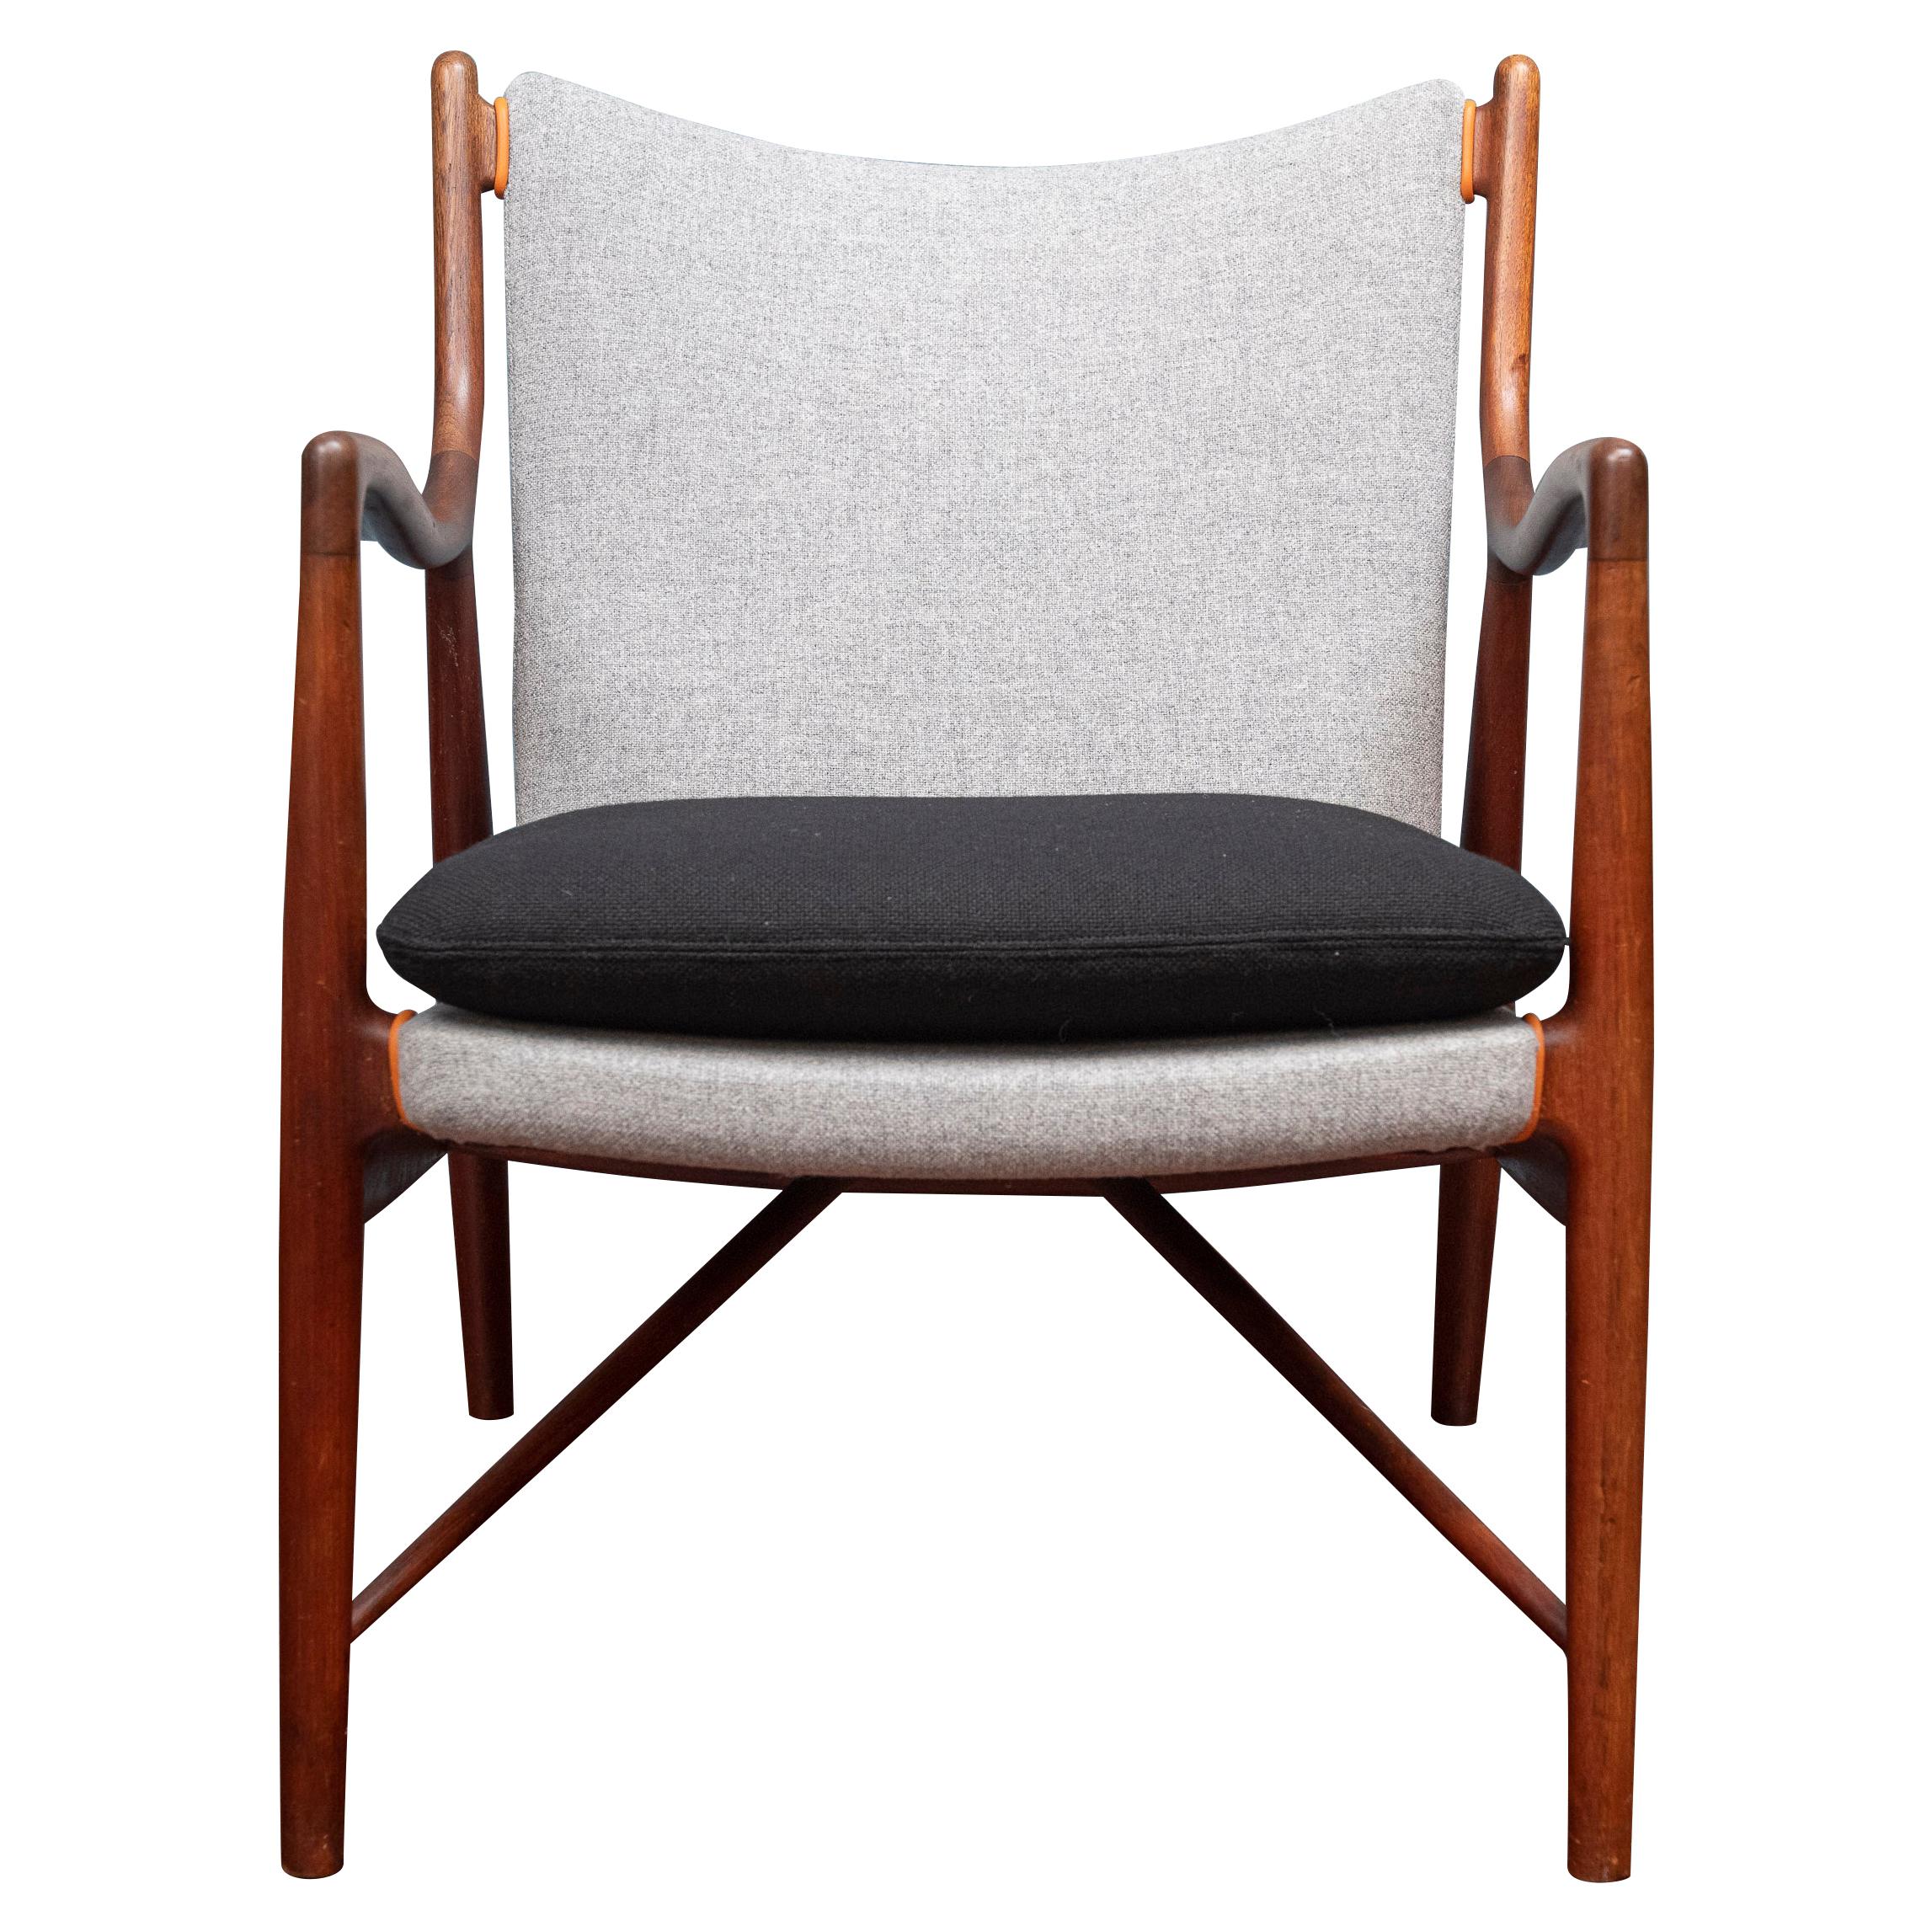 Finn Juhl NV 45 Chair by Niels Vodder